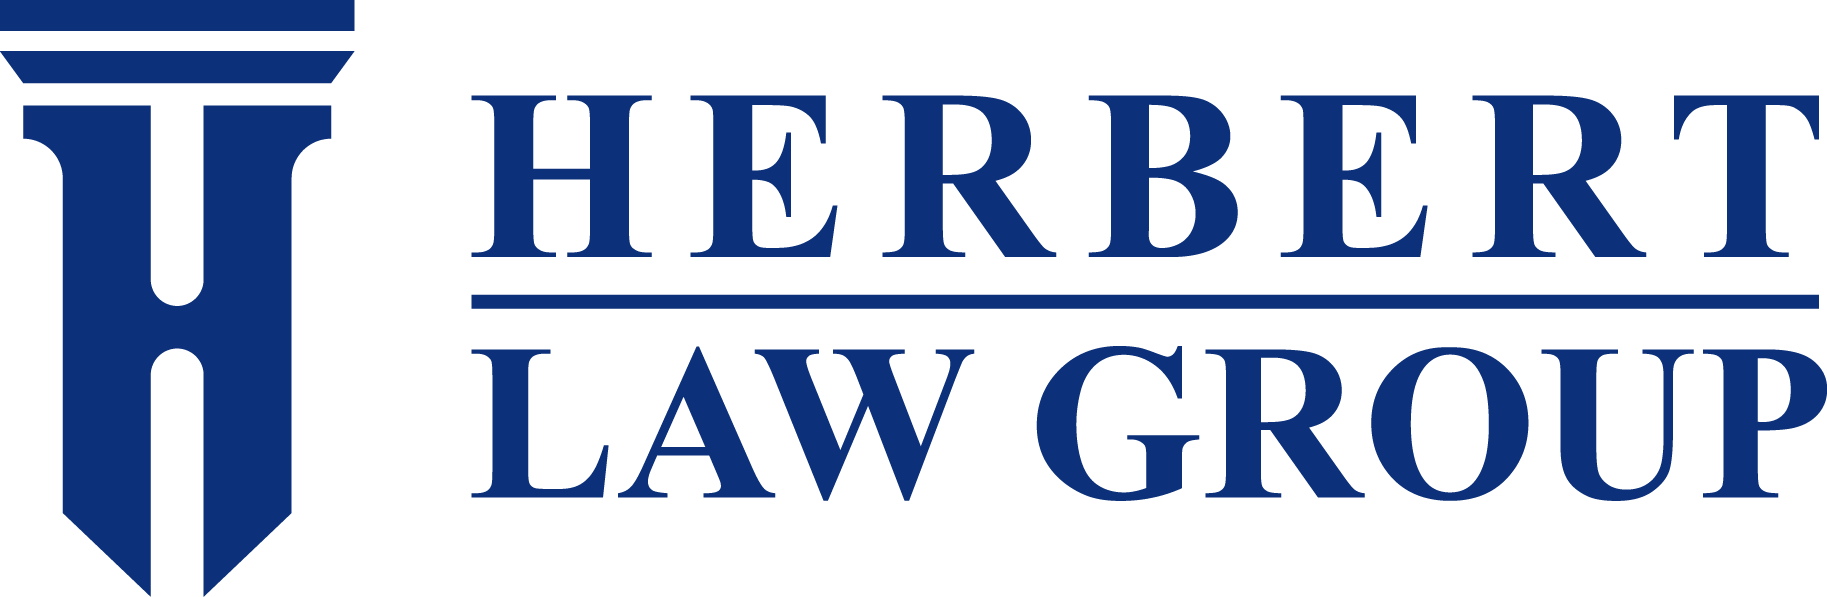 Herbert Law Group2